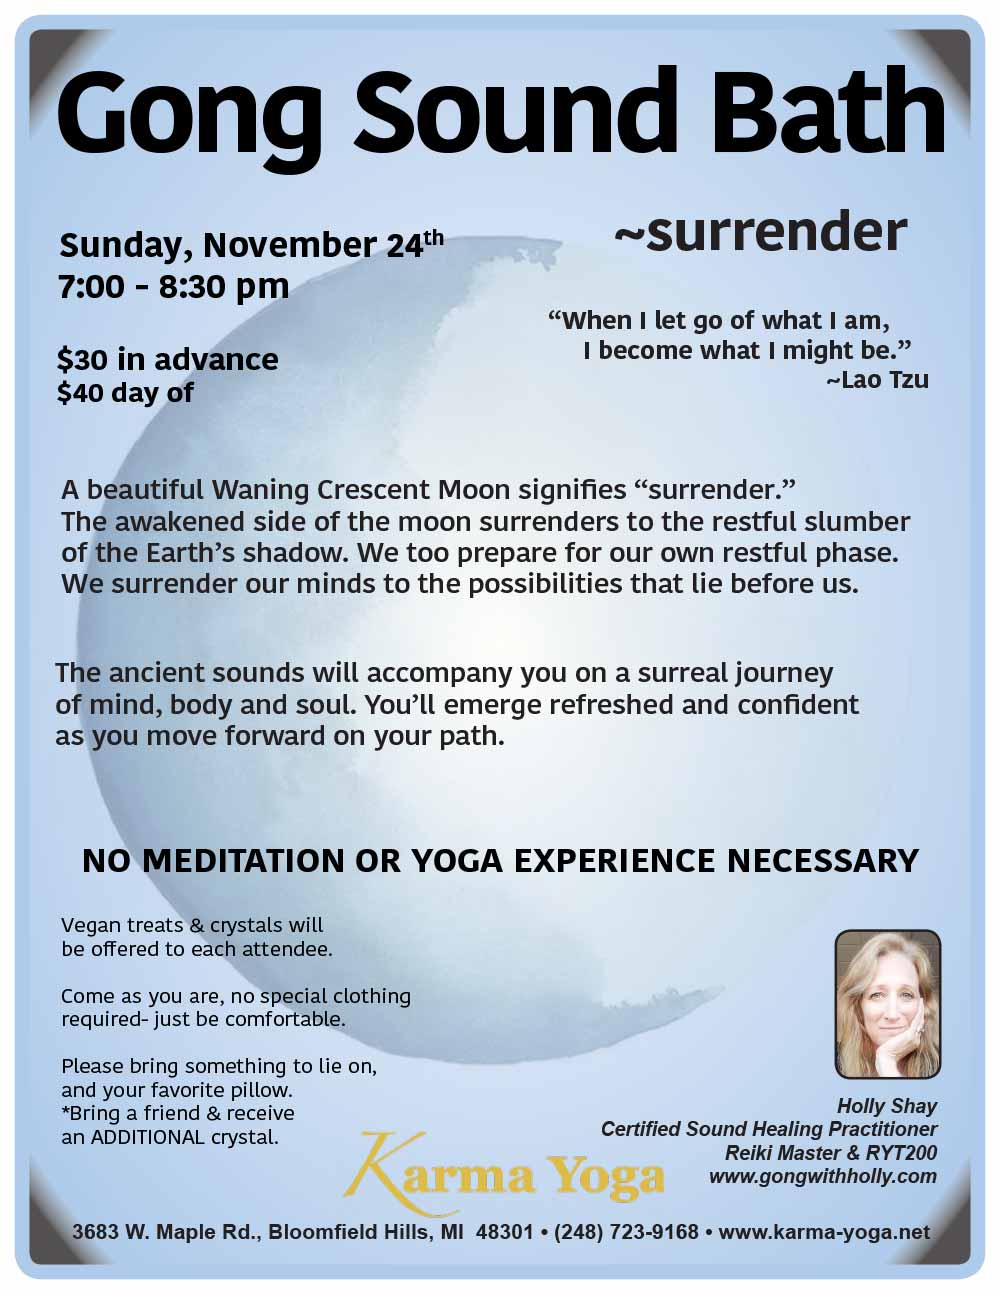 Gong Sound Bath, Nov 24, 7pm, Karma Yoga, Bloomfield Hills, MI